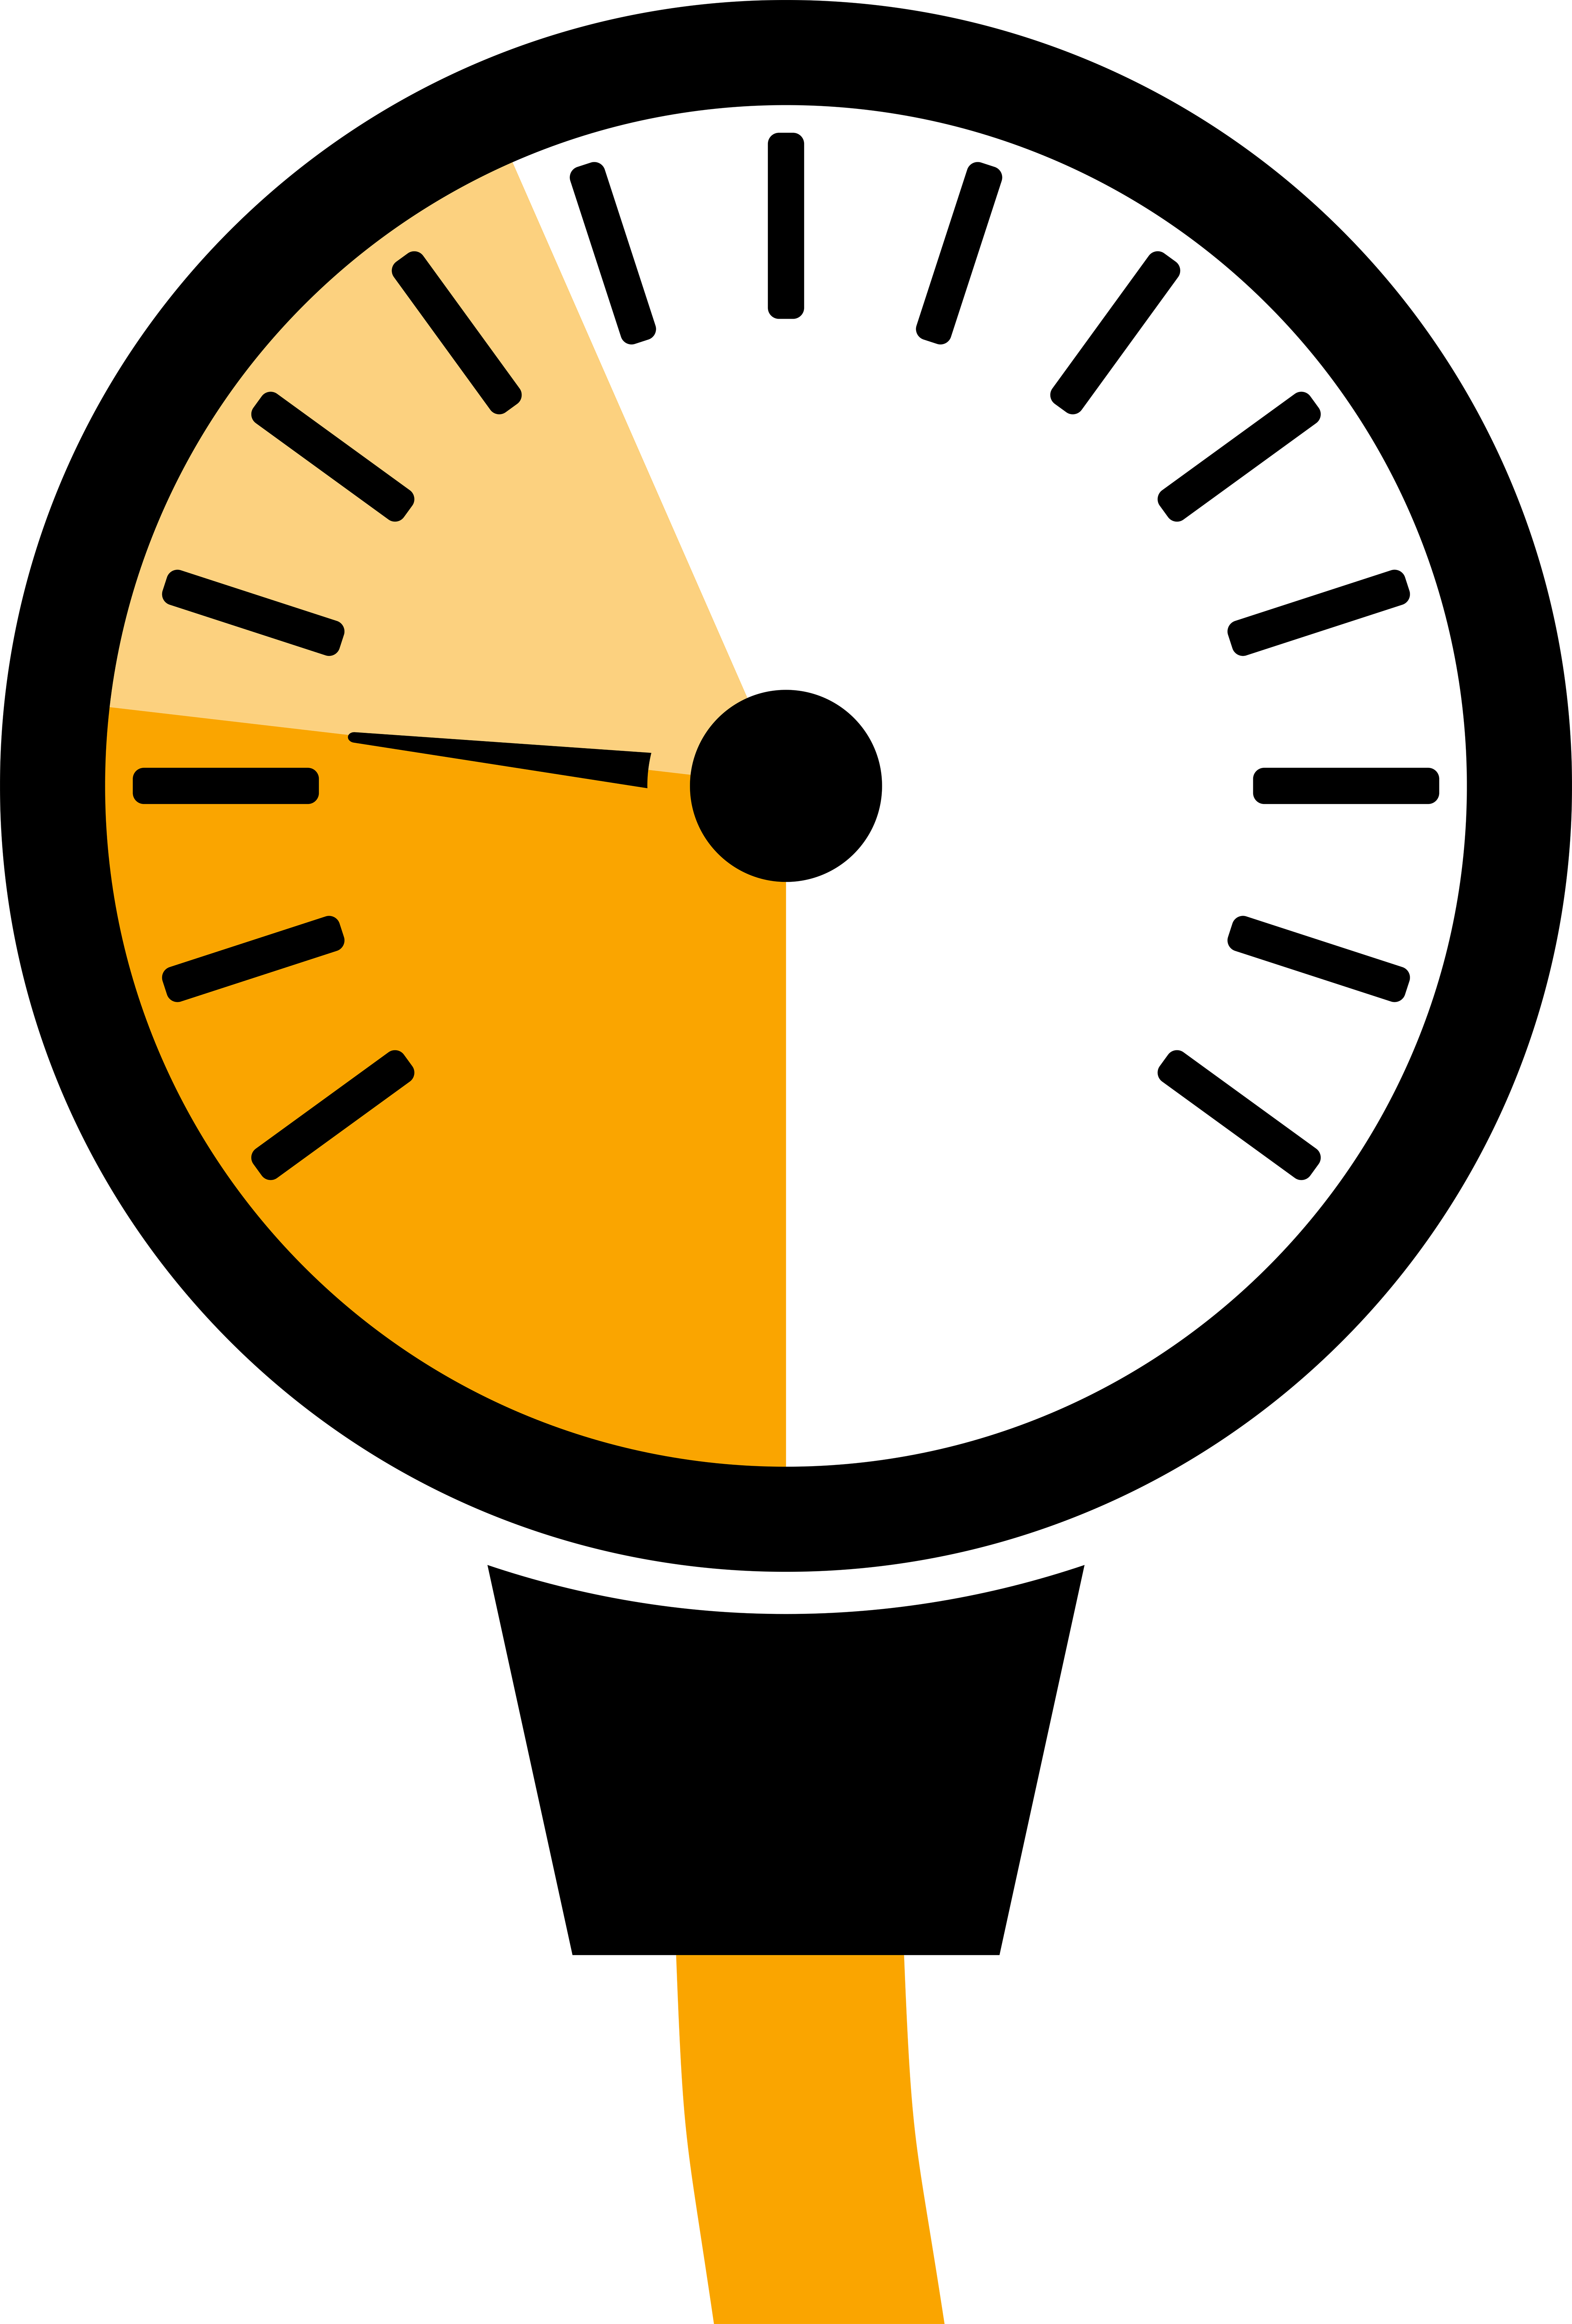 A indicating gauge.